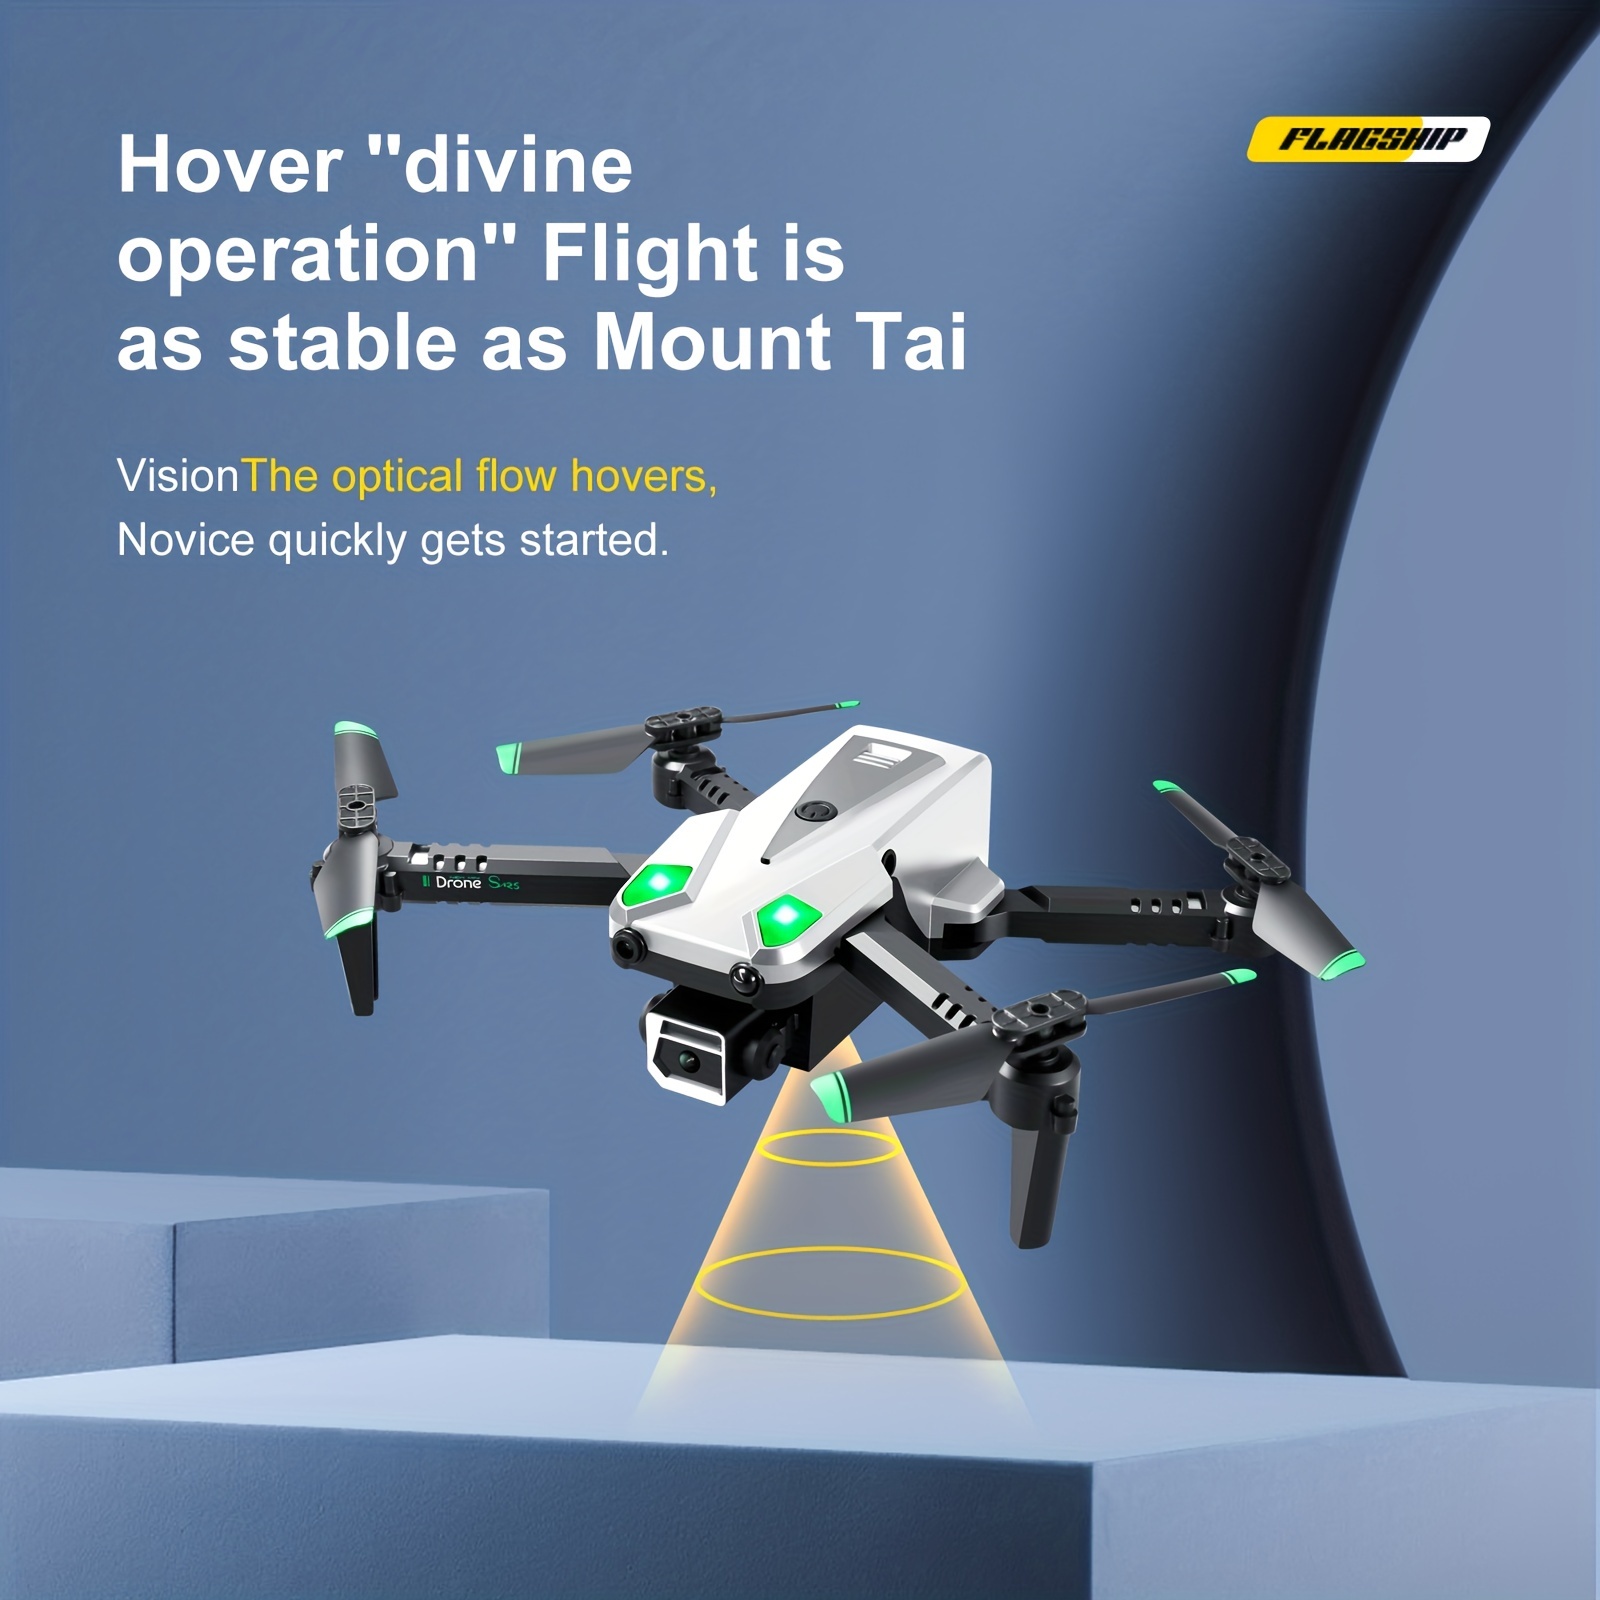 Mini Drone Para Niños Principiantes 2.4ghz Rc Quadcopter